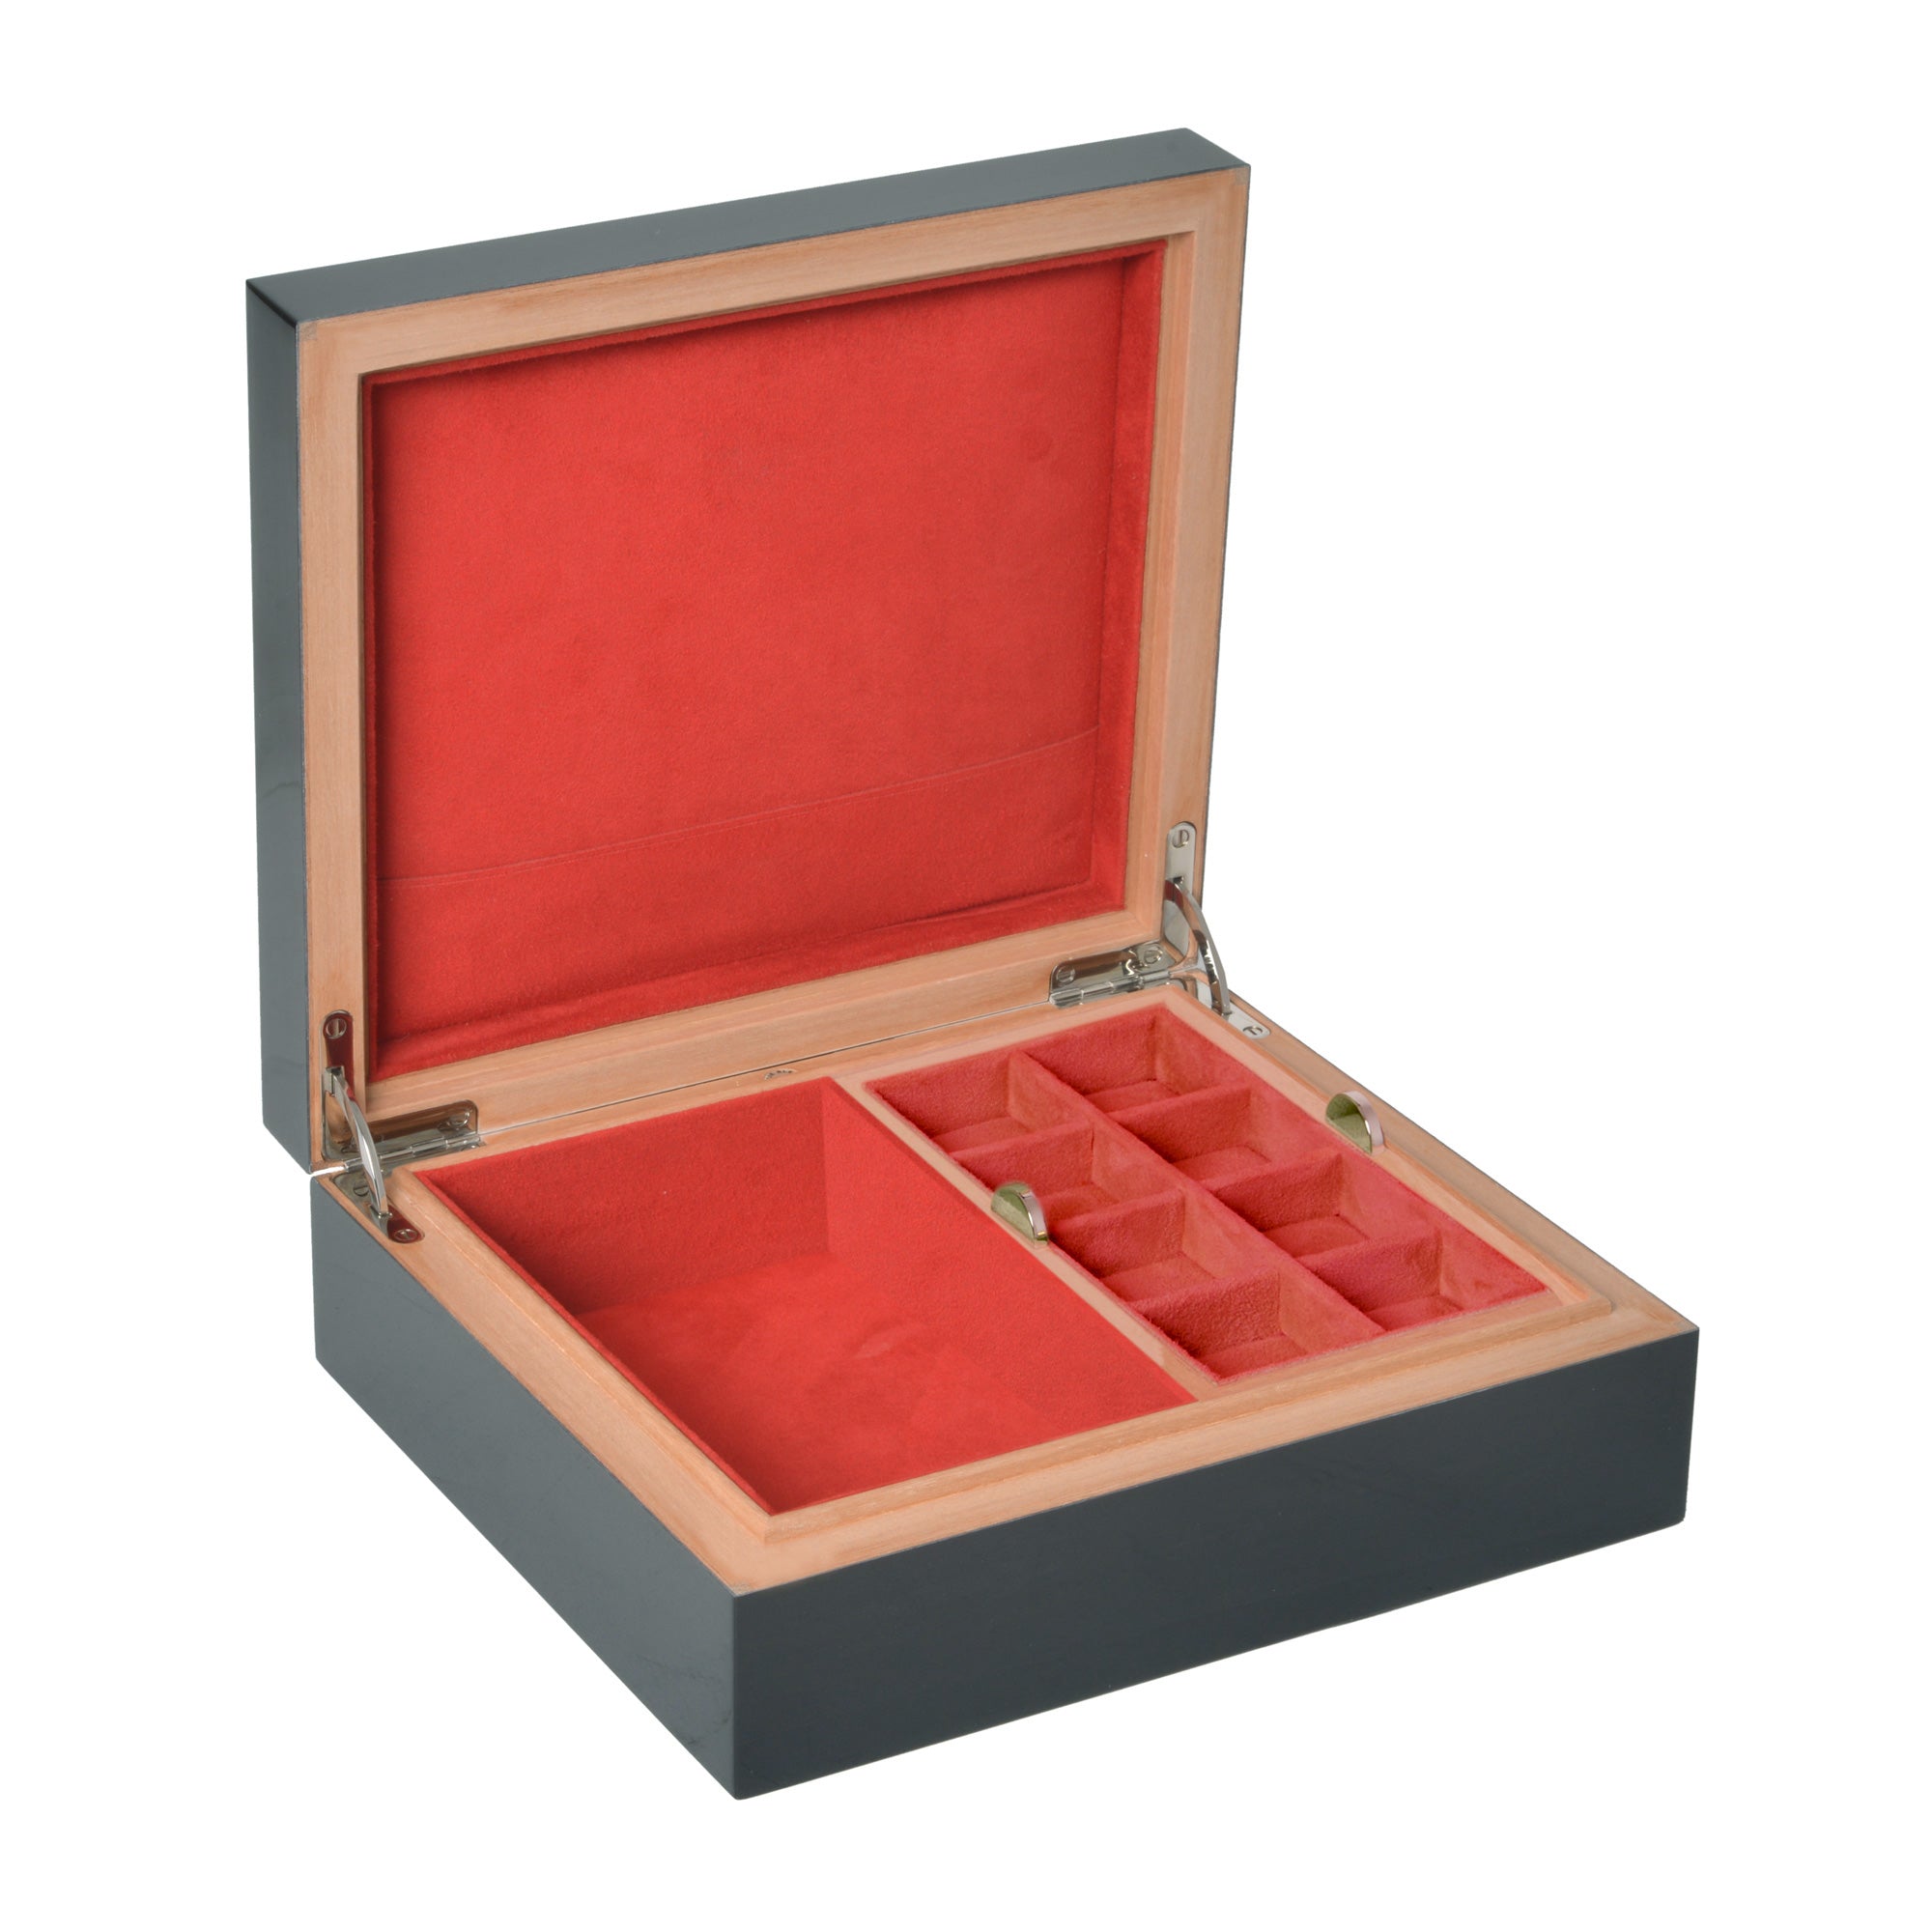 "Fruit - Two-tone - Jewellery box Size 20